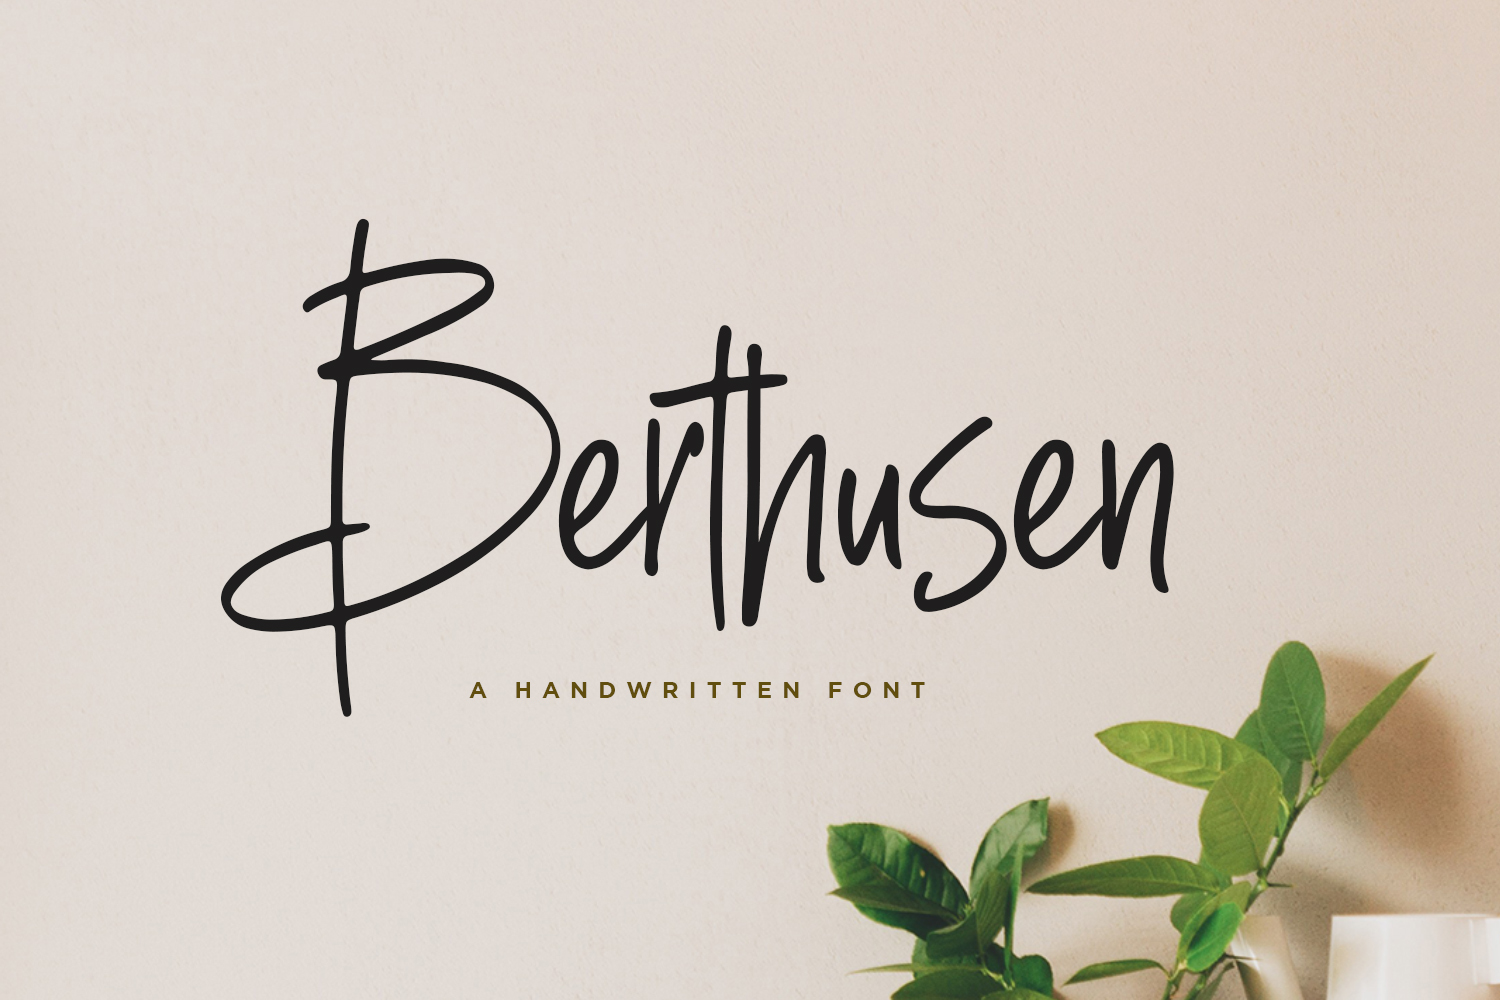 Berthusen Free Font